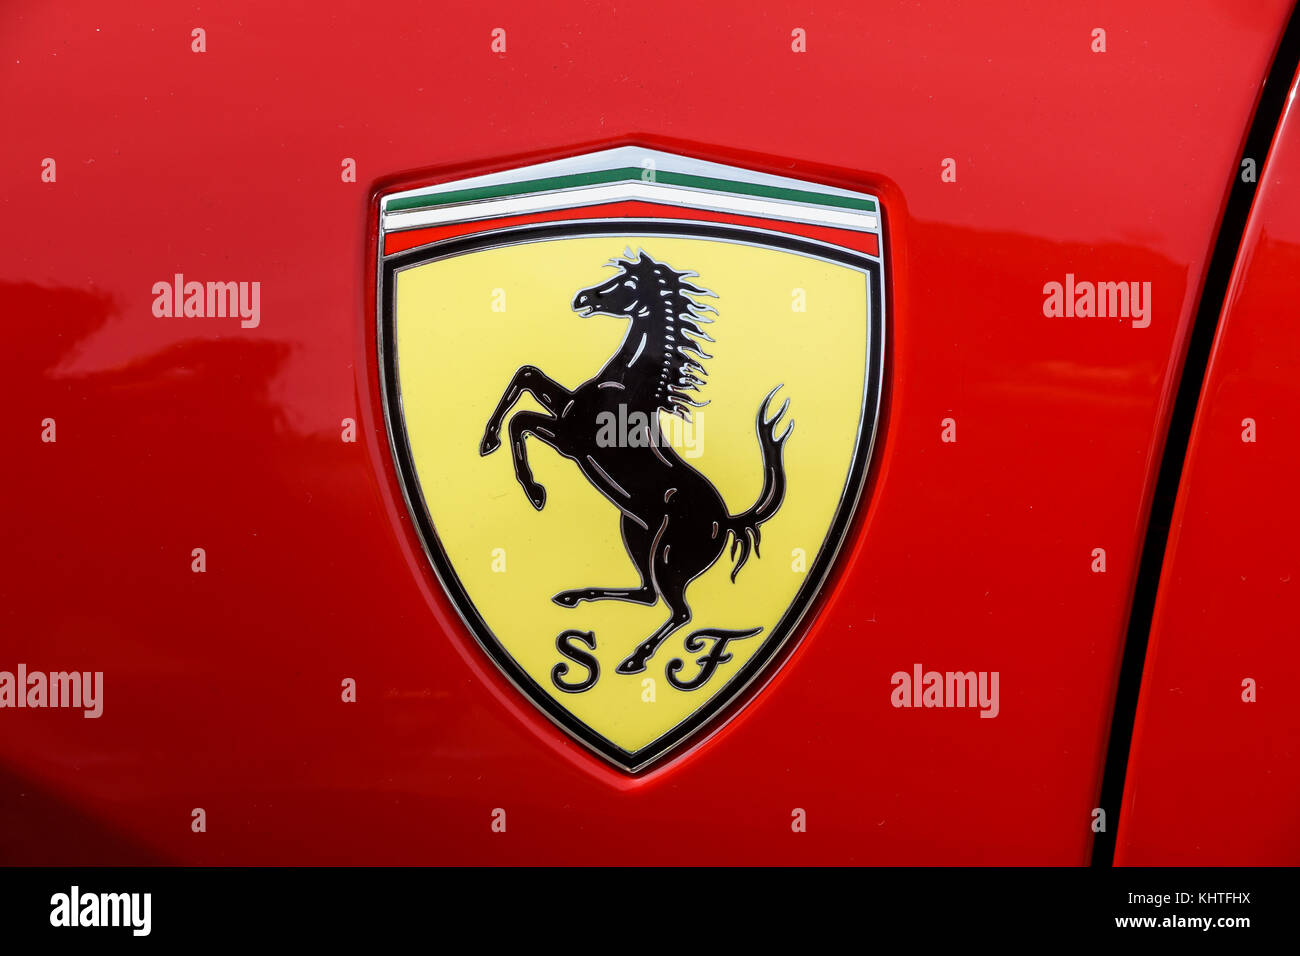 TURIN, ITALY - JUNE 10, 2017: Classic Ferrari logo on a red car body Stock Photo